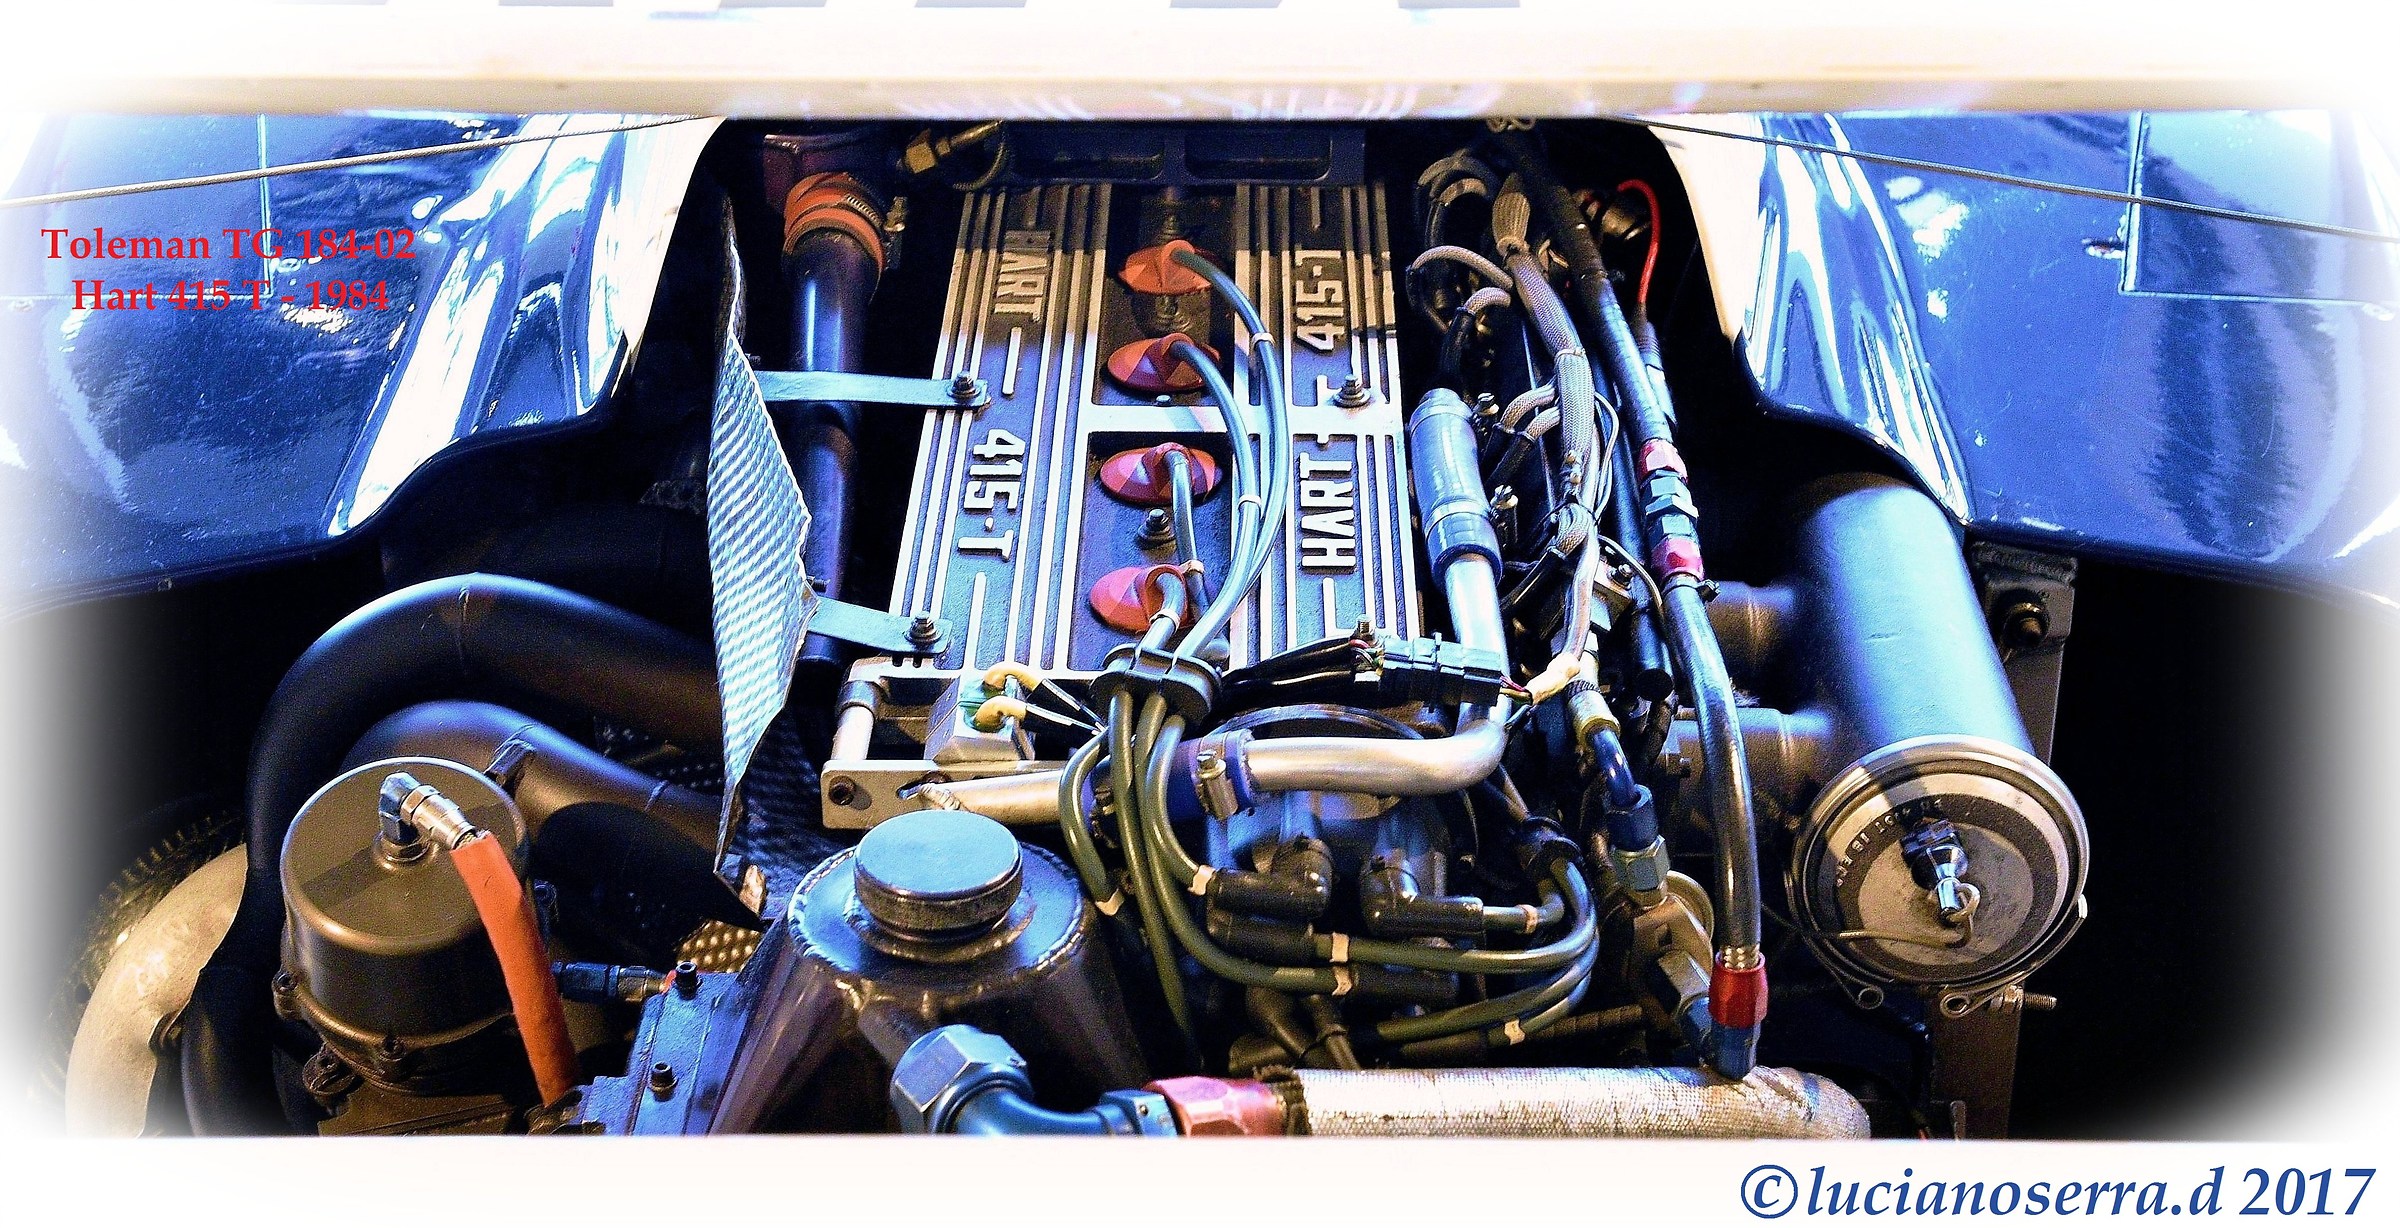 Toleman TG 184-02 - 1984 Hart 415 Turbo Engine...